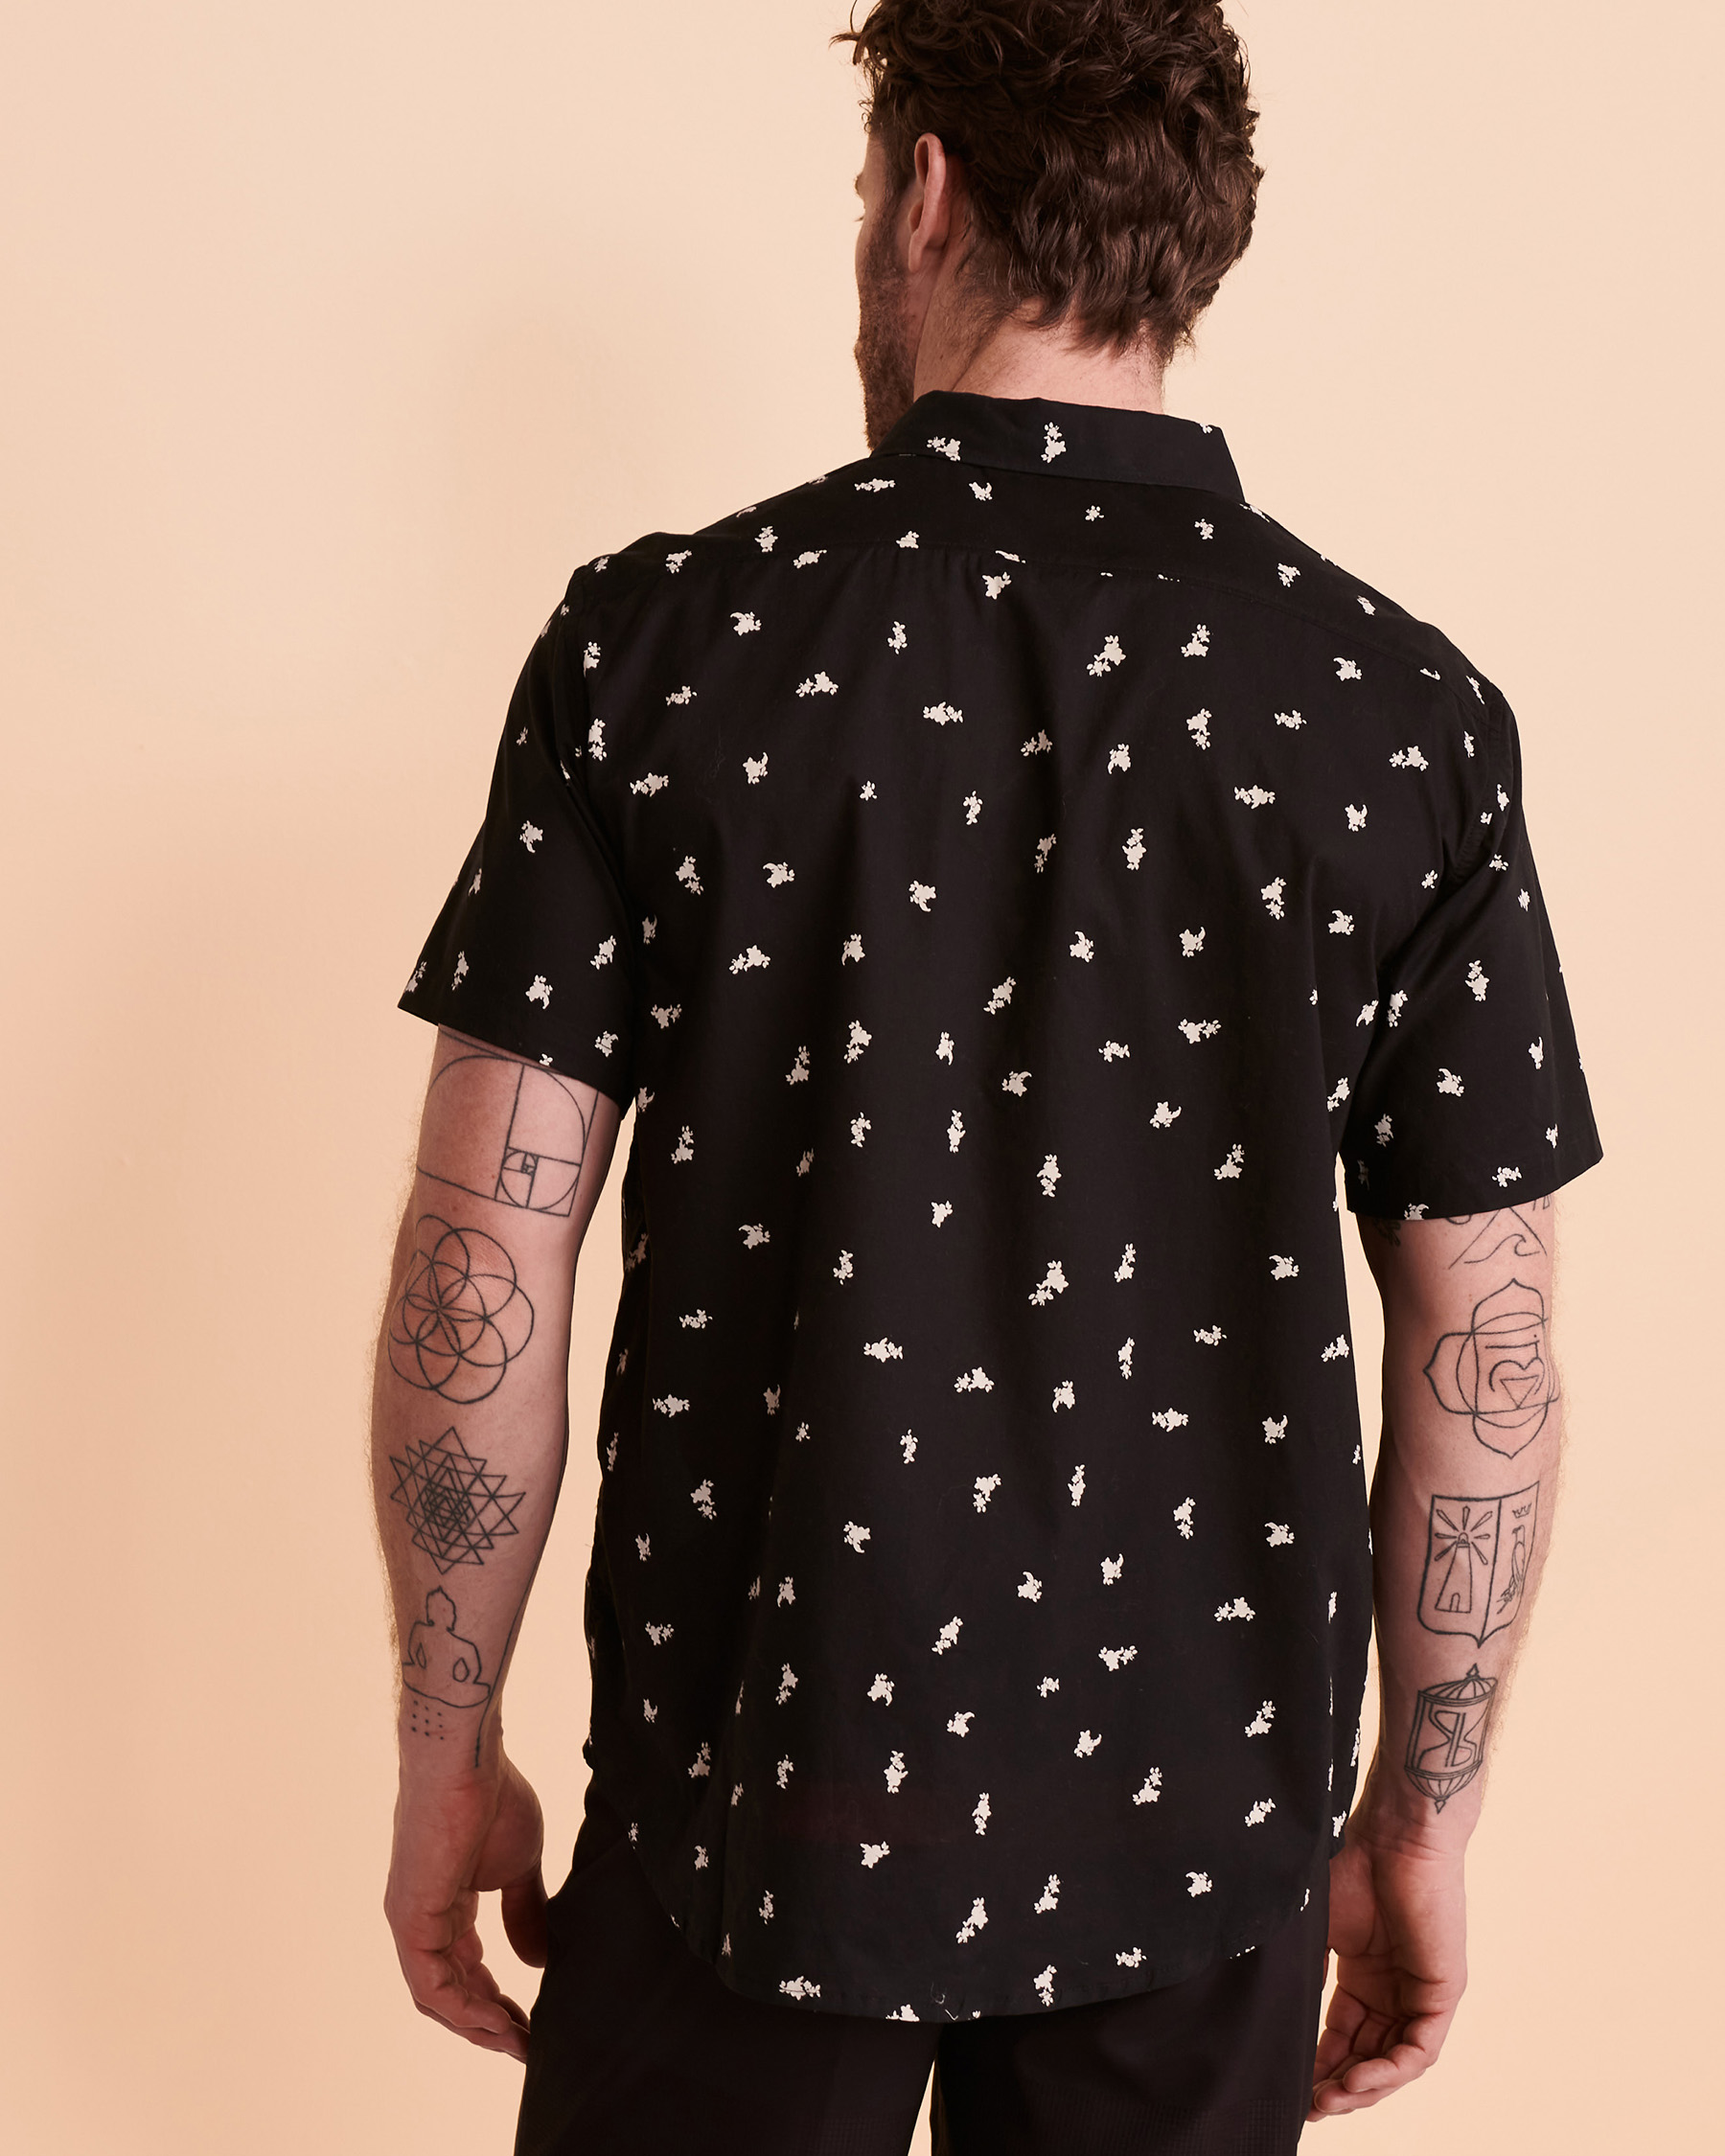 BILLABONG SUNDAYS MINI Short Sleeve Shirt Black print ABYWT00203 - View3